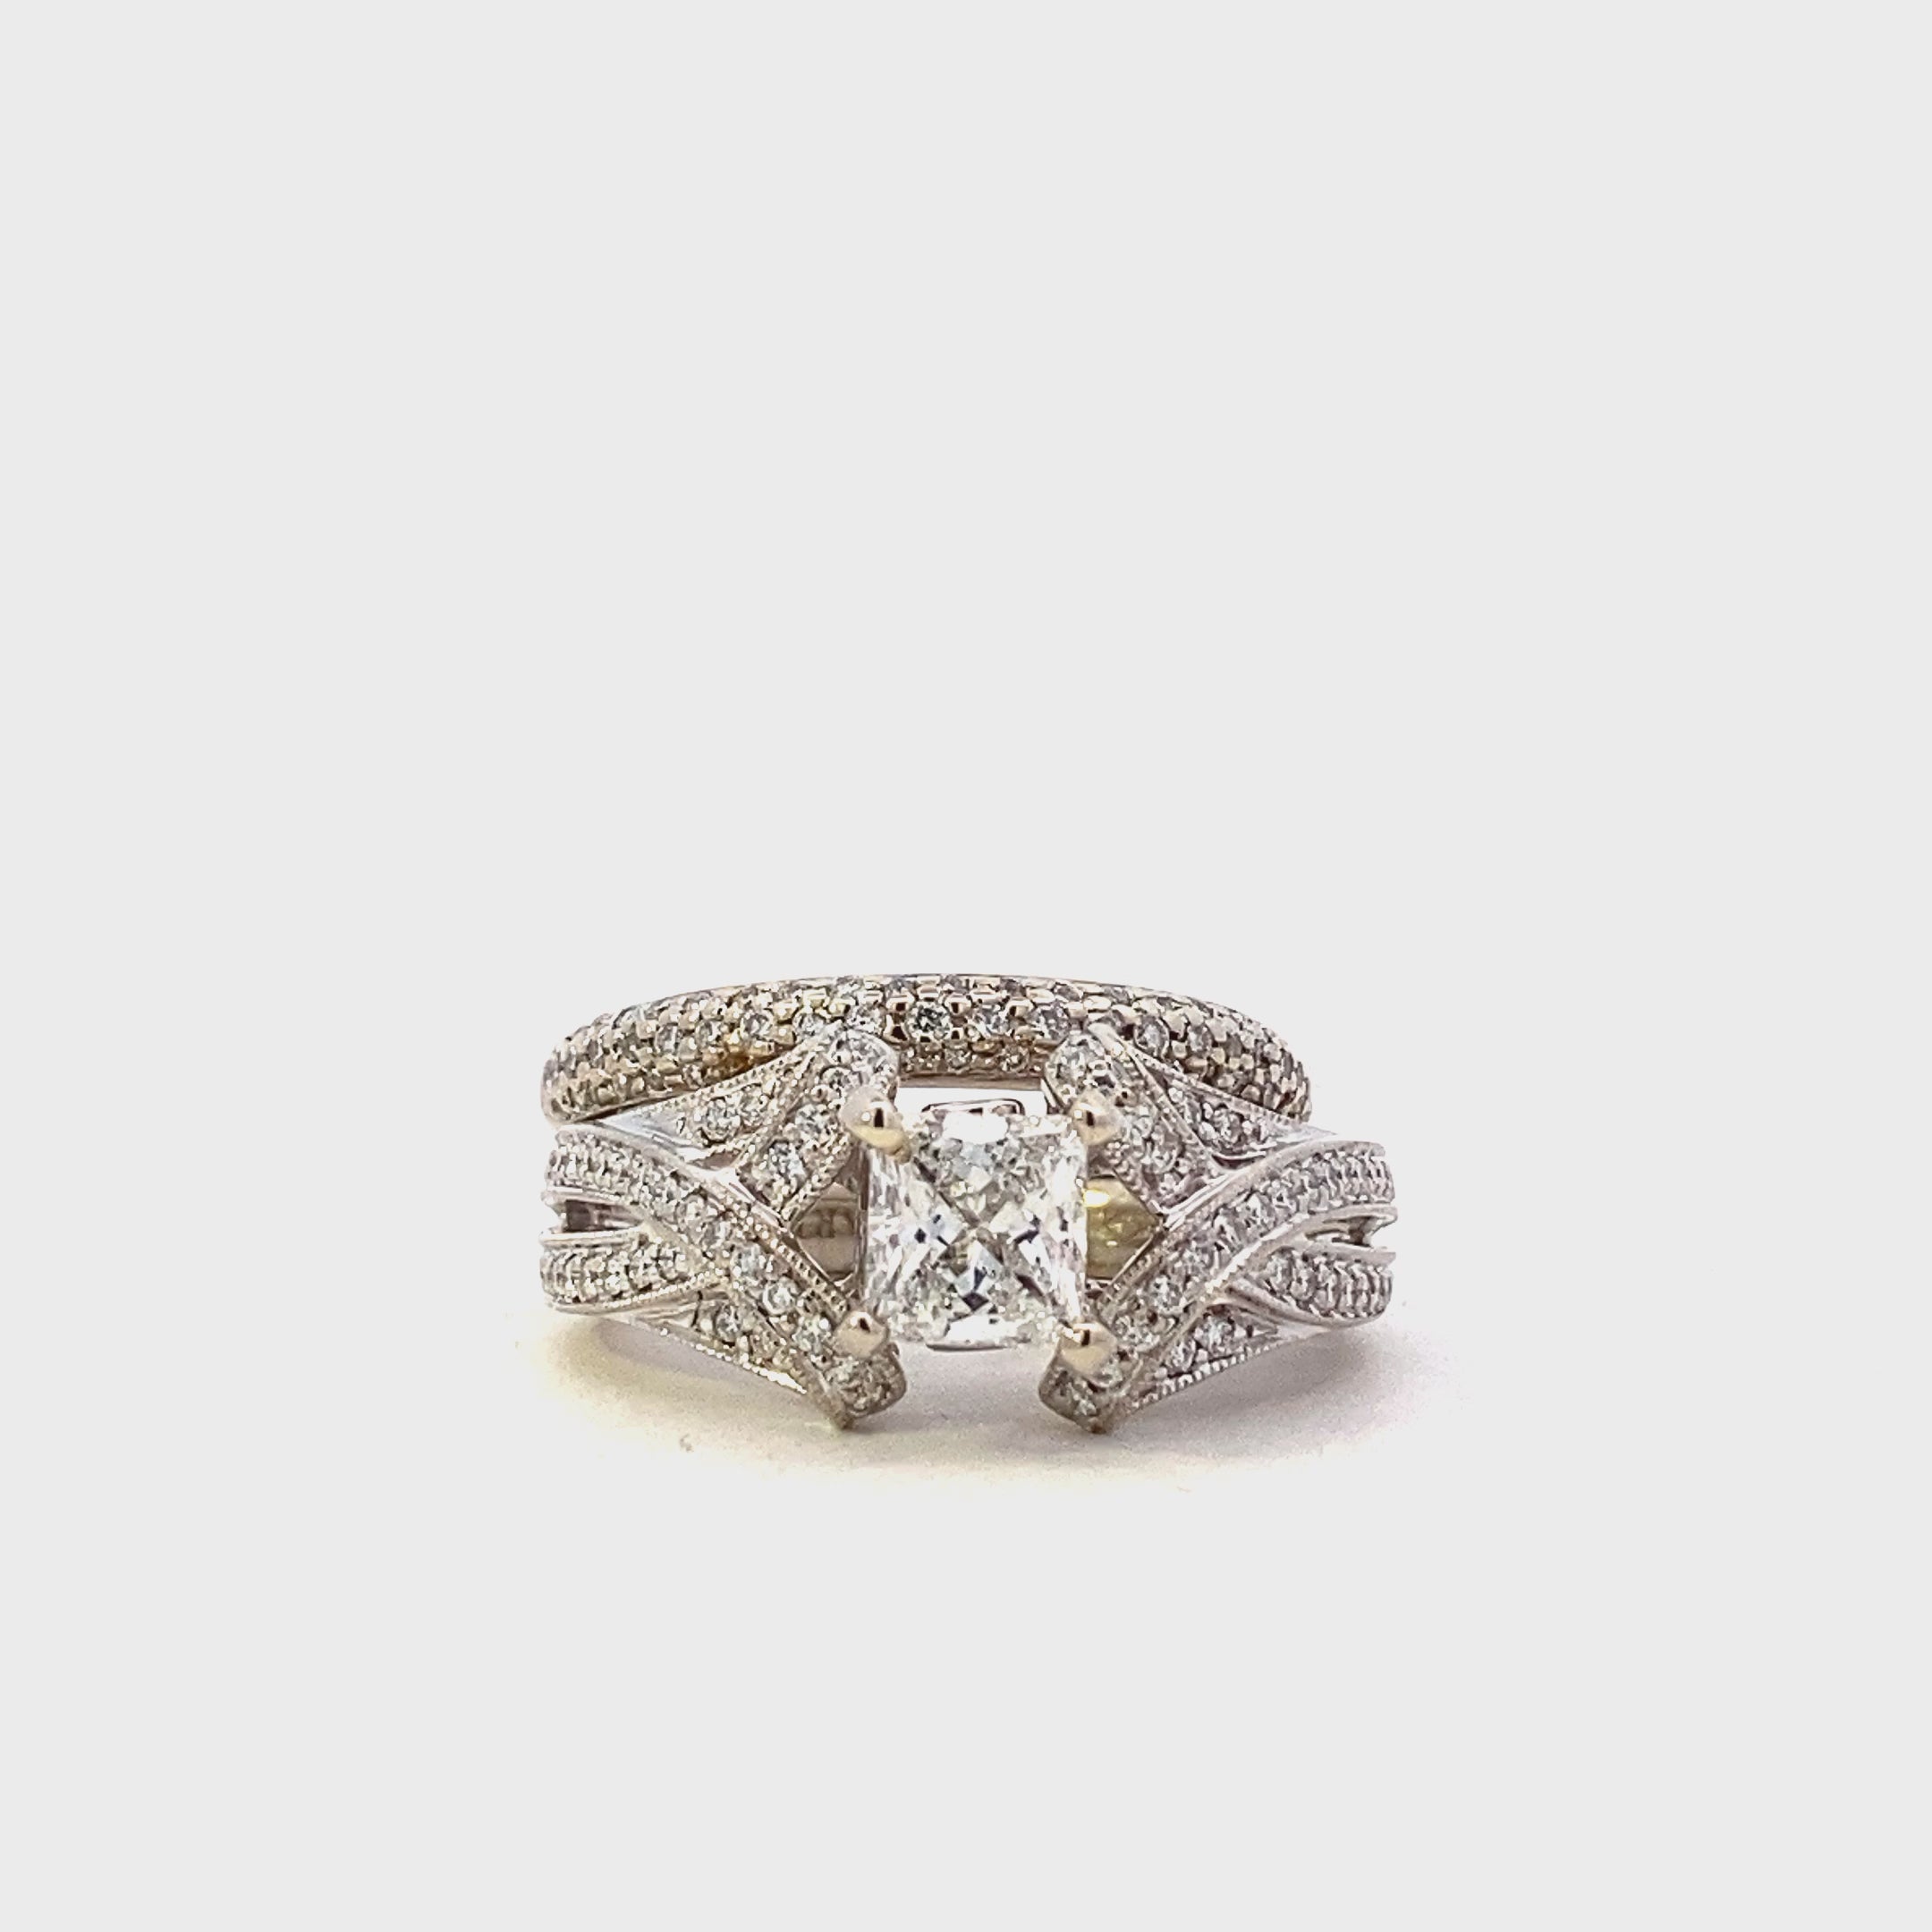 14K White Gold Diamond Engagement & Wedding Ring Set - 1.32ct